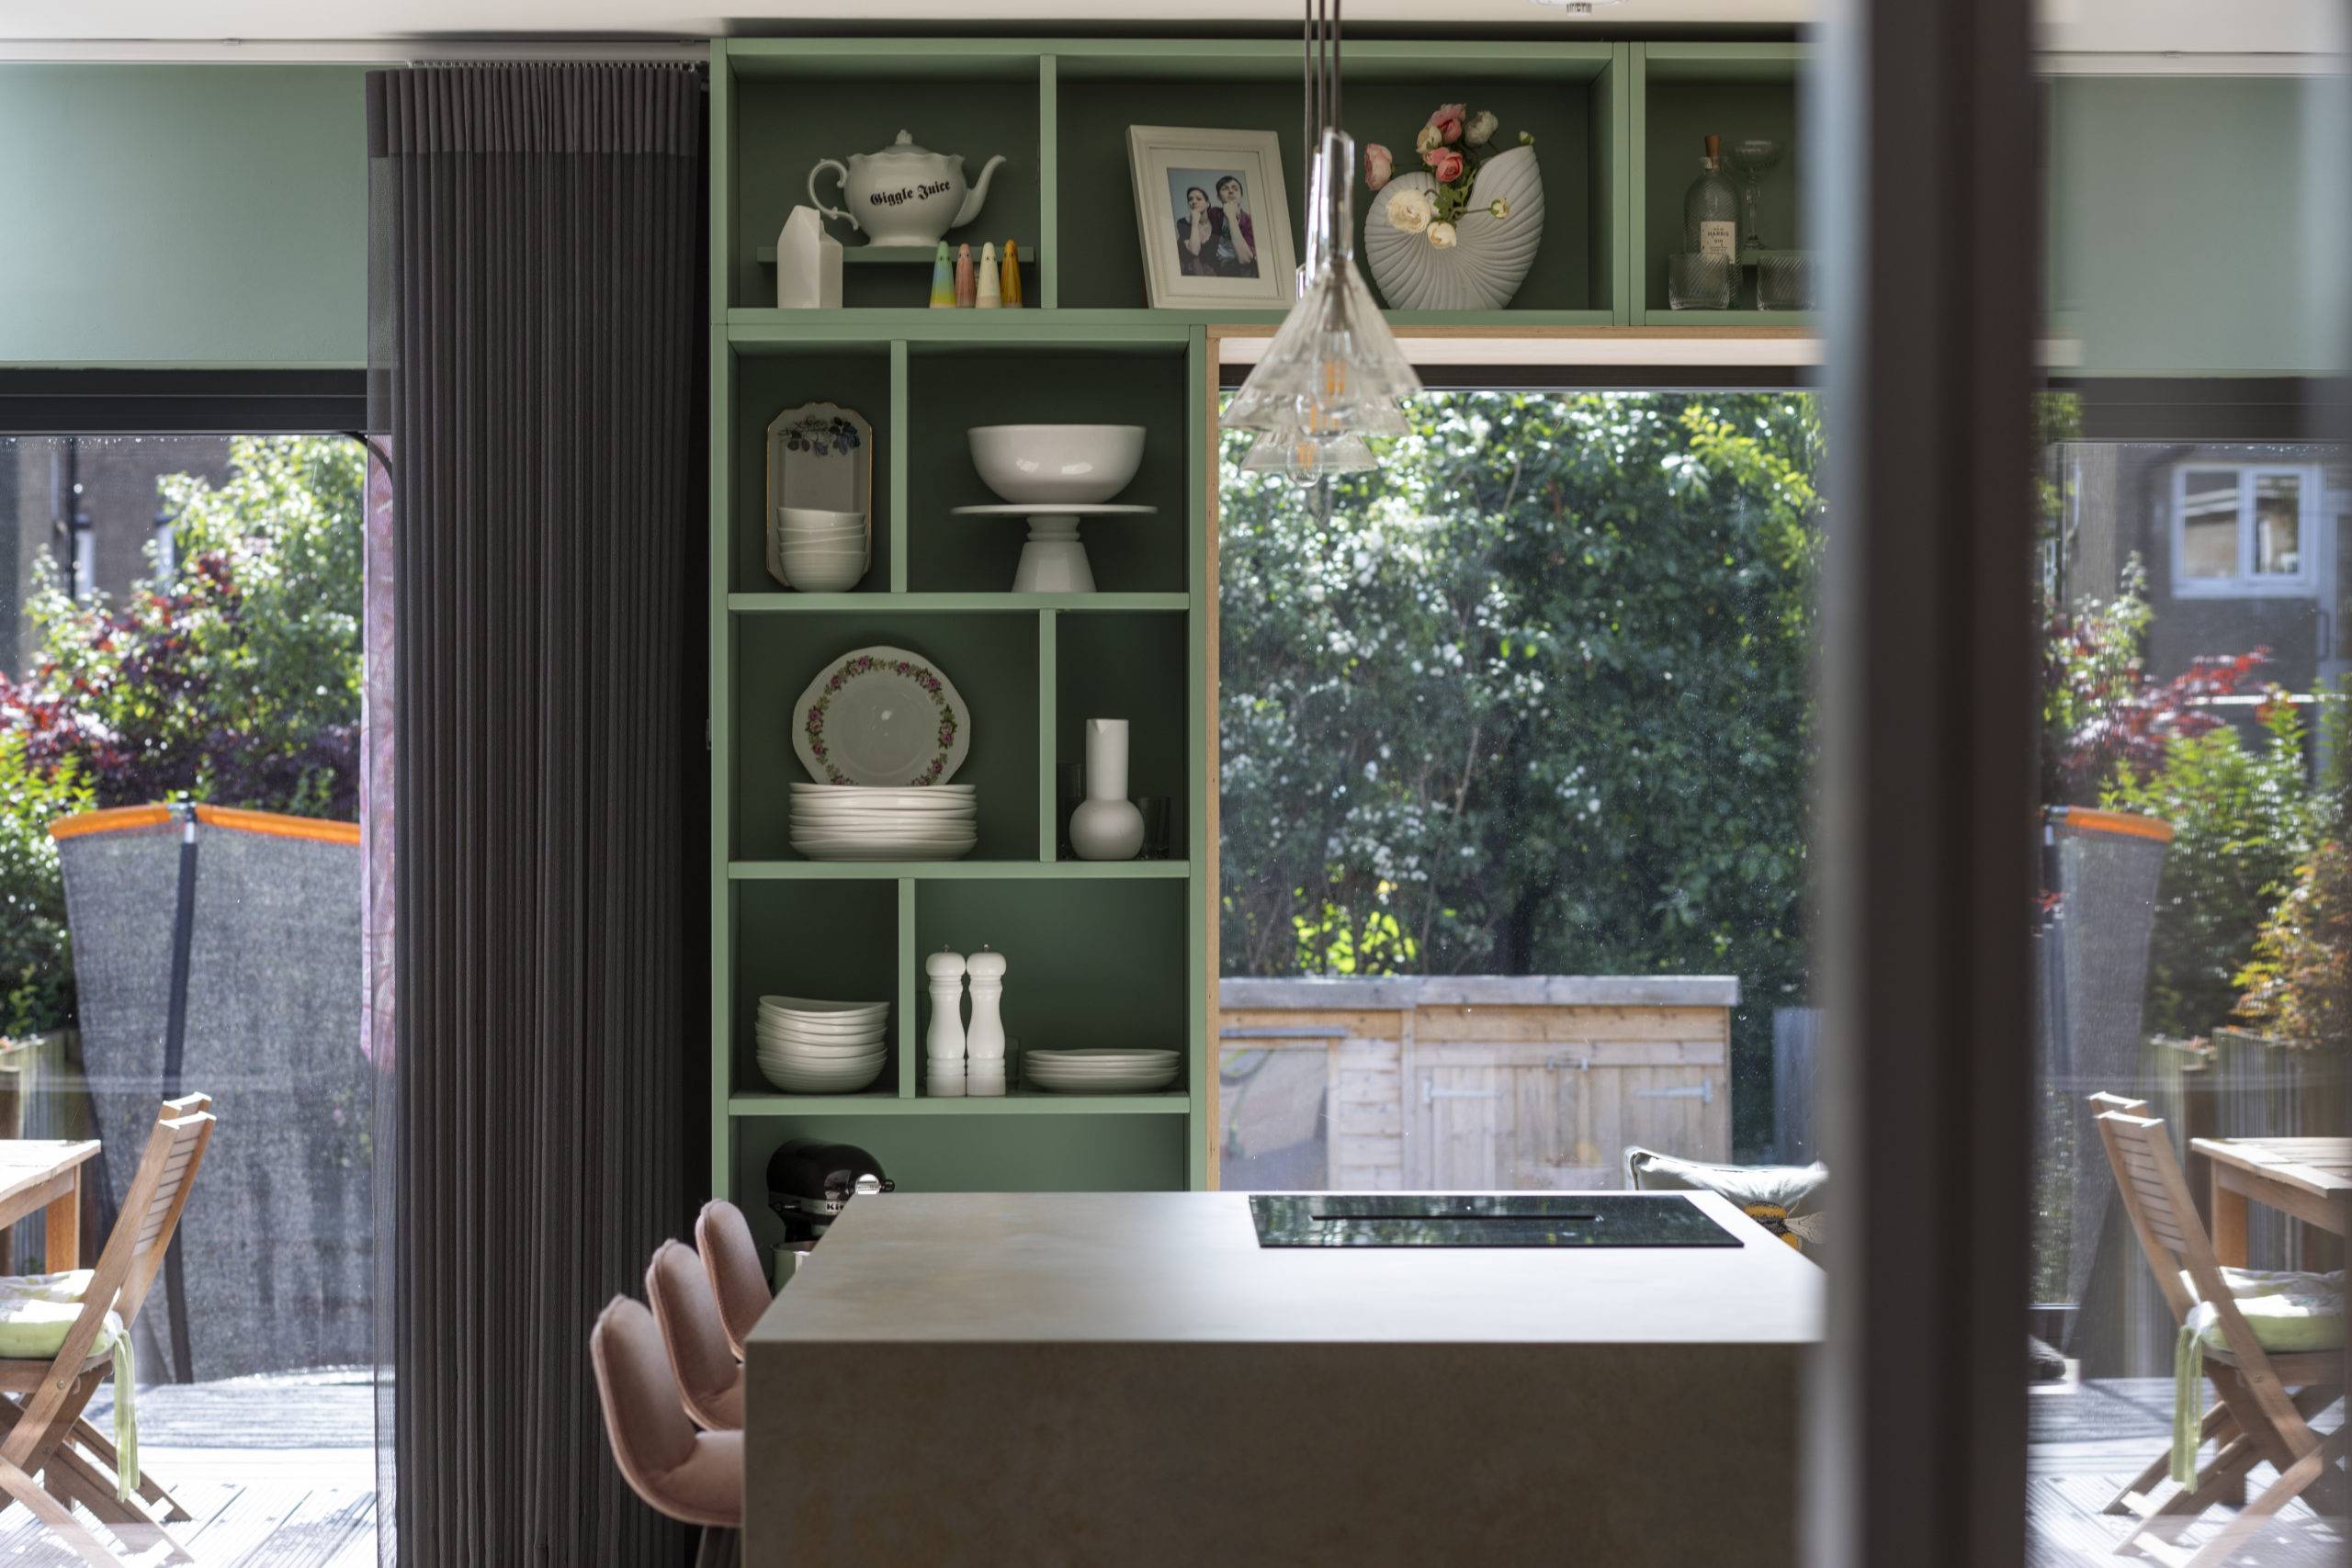 custom green floor to ceiling shelving display plates, vases, and belongings around large window seat